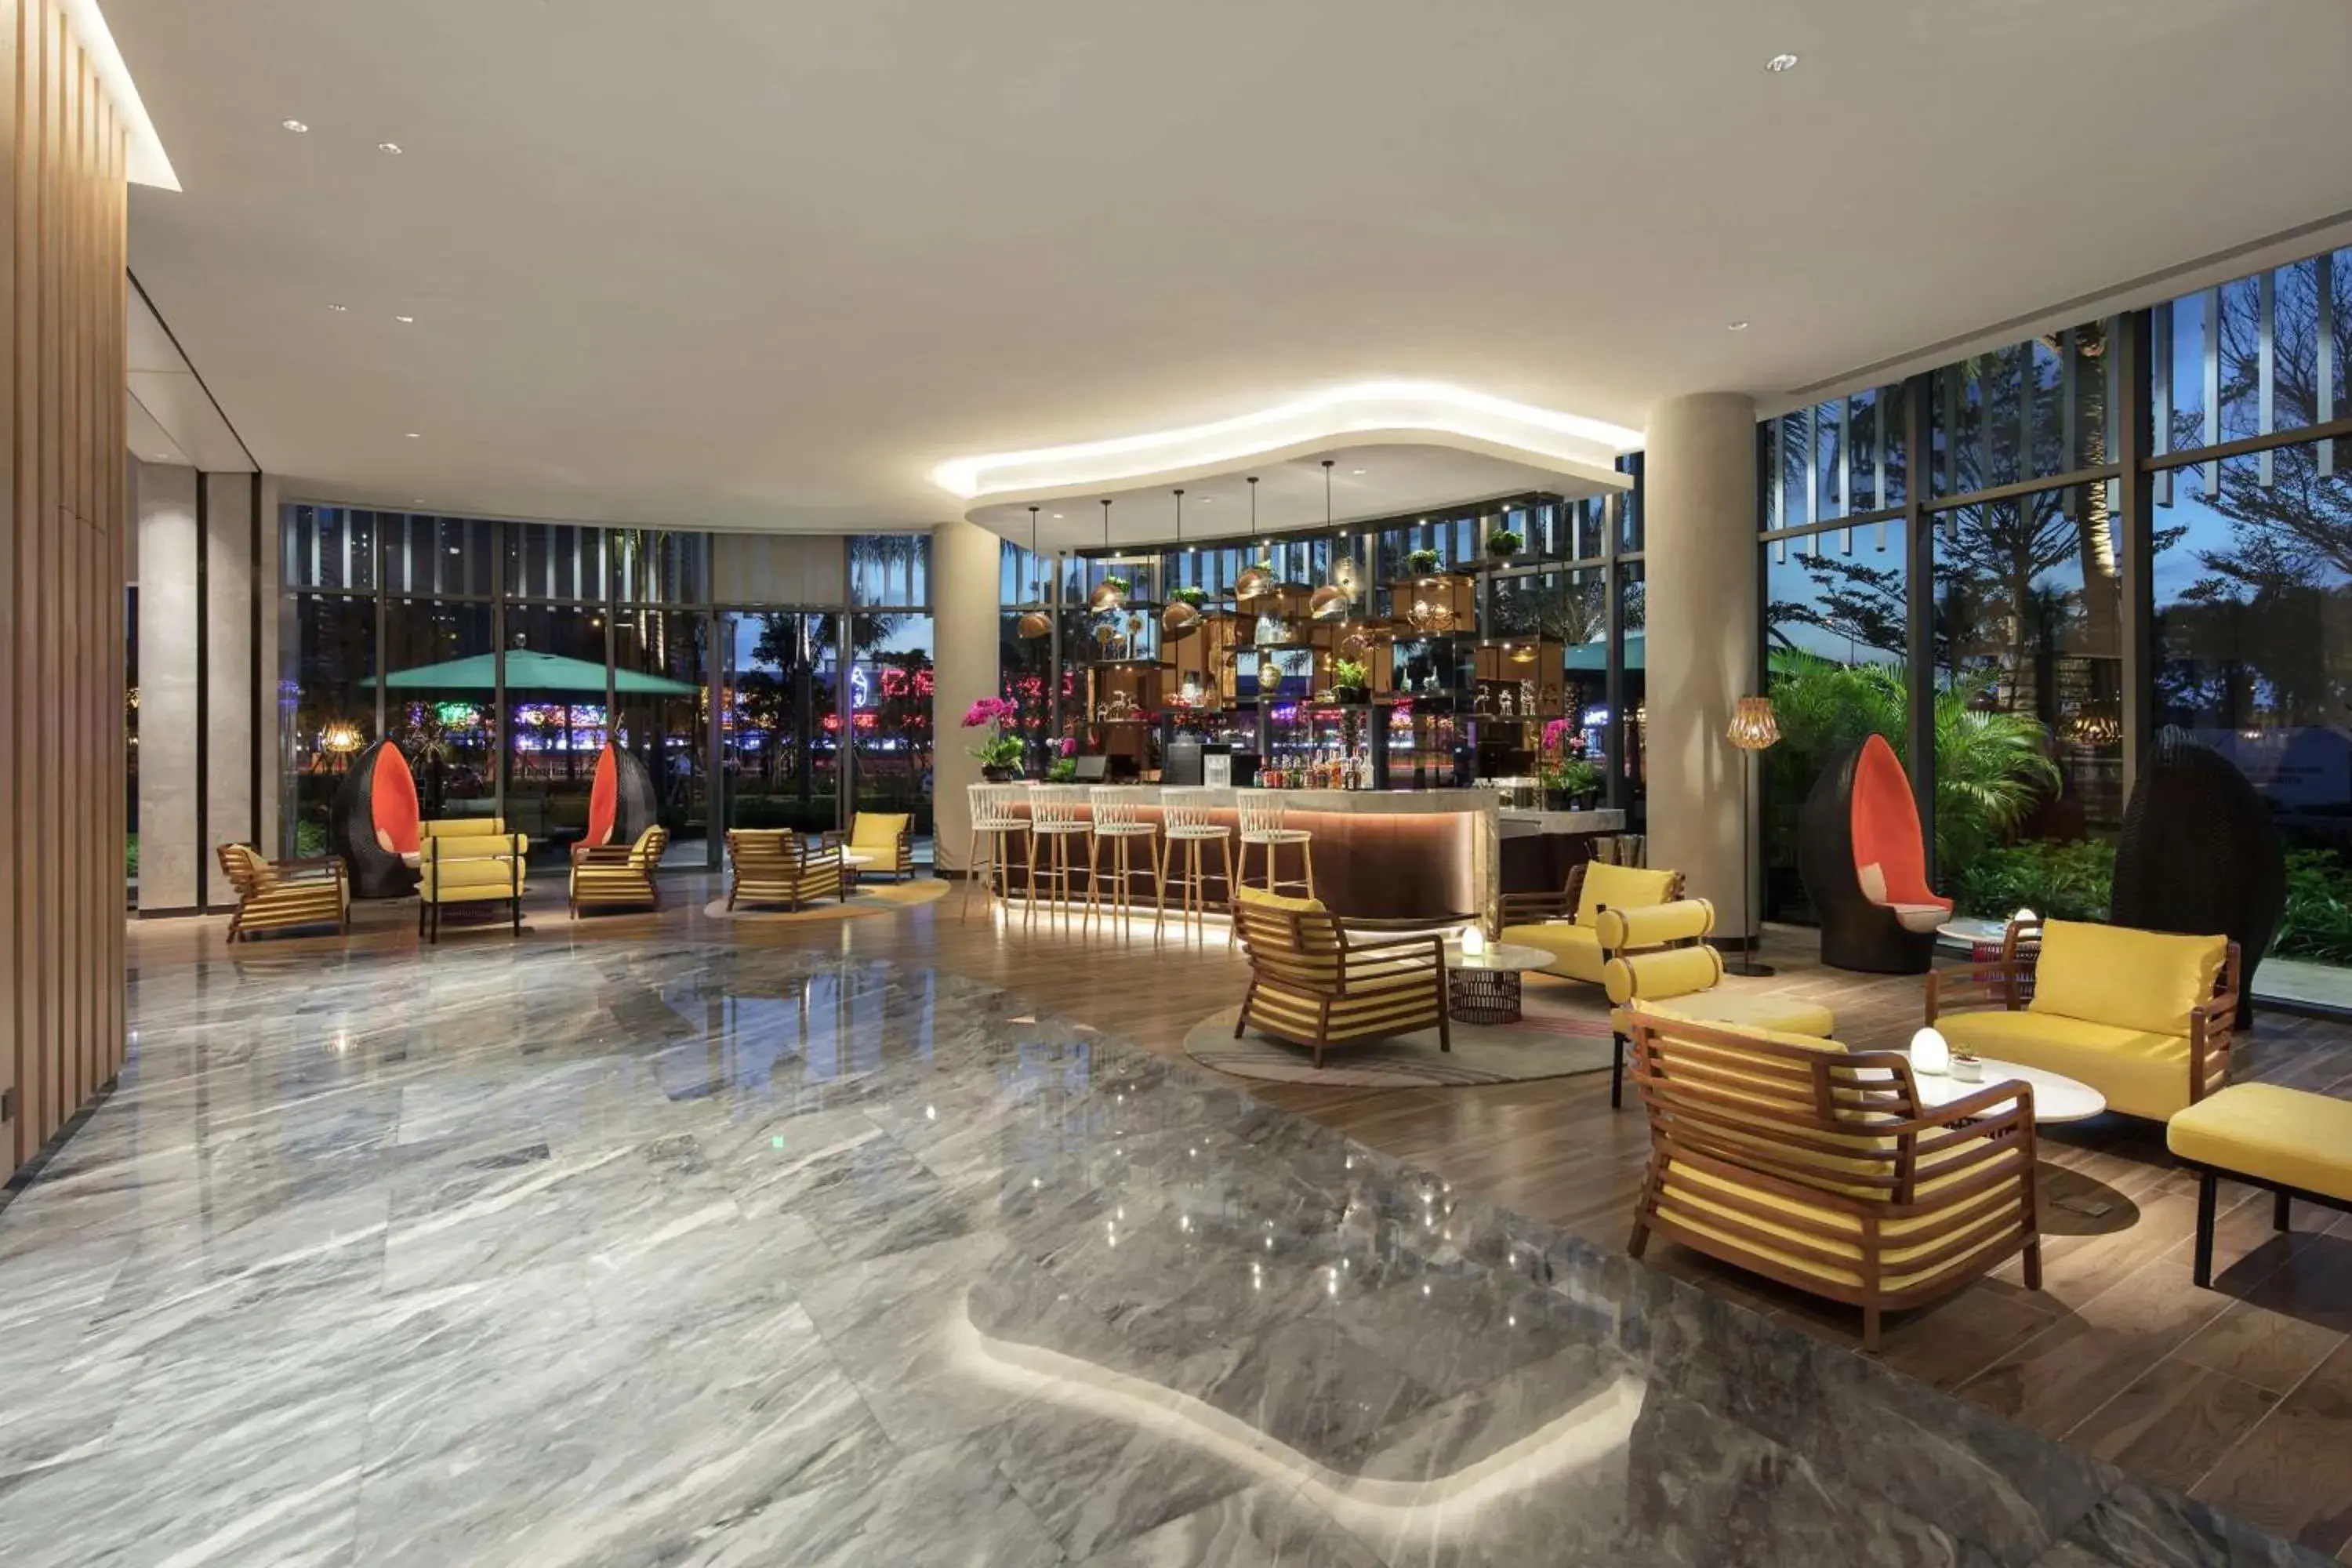 Lobby or reception in Hilton Garden Inn Sanya, China